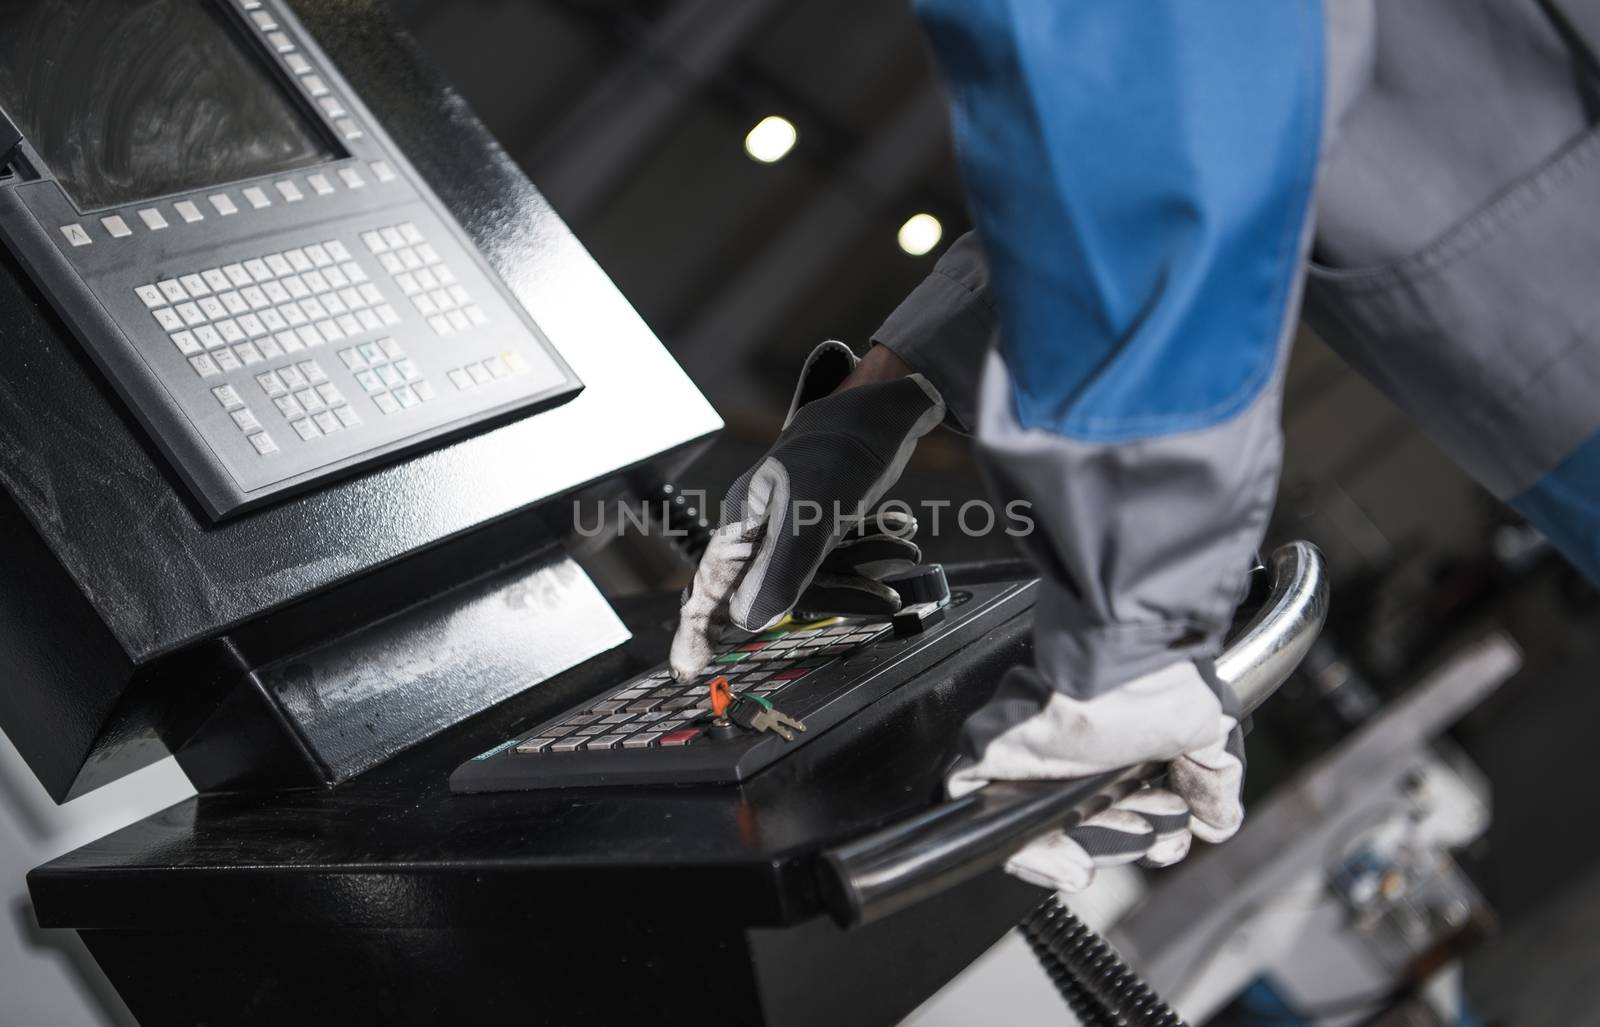 CNC Machine Control Panel Operator Closeup Photo. Metalworking and Manufacturing Concept Photo.